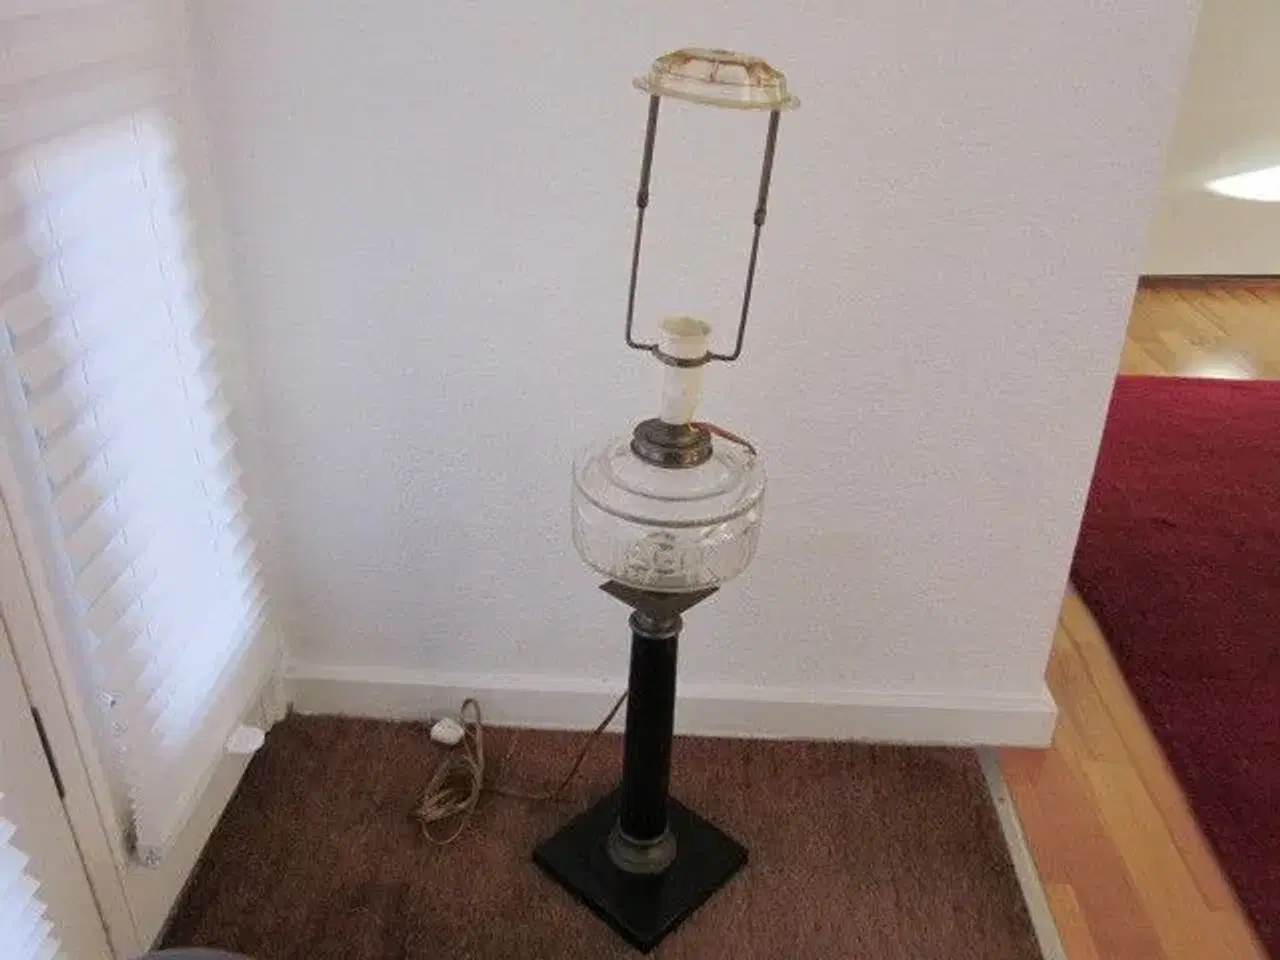 Billede 2 - petroleumslampe